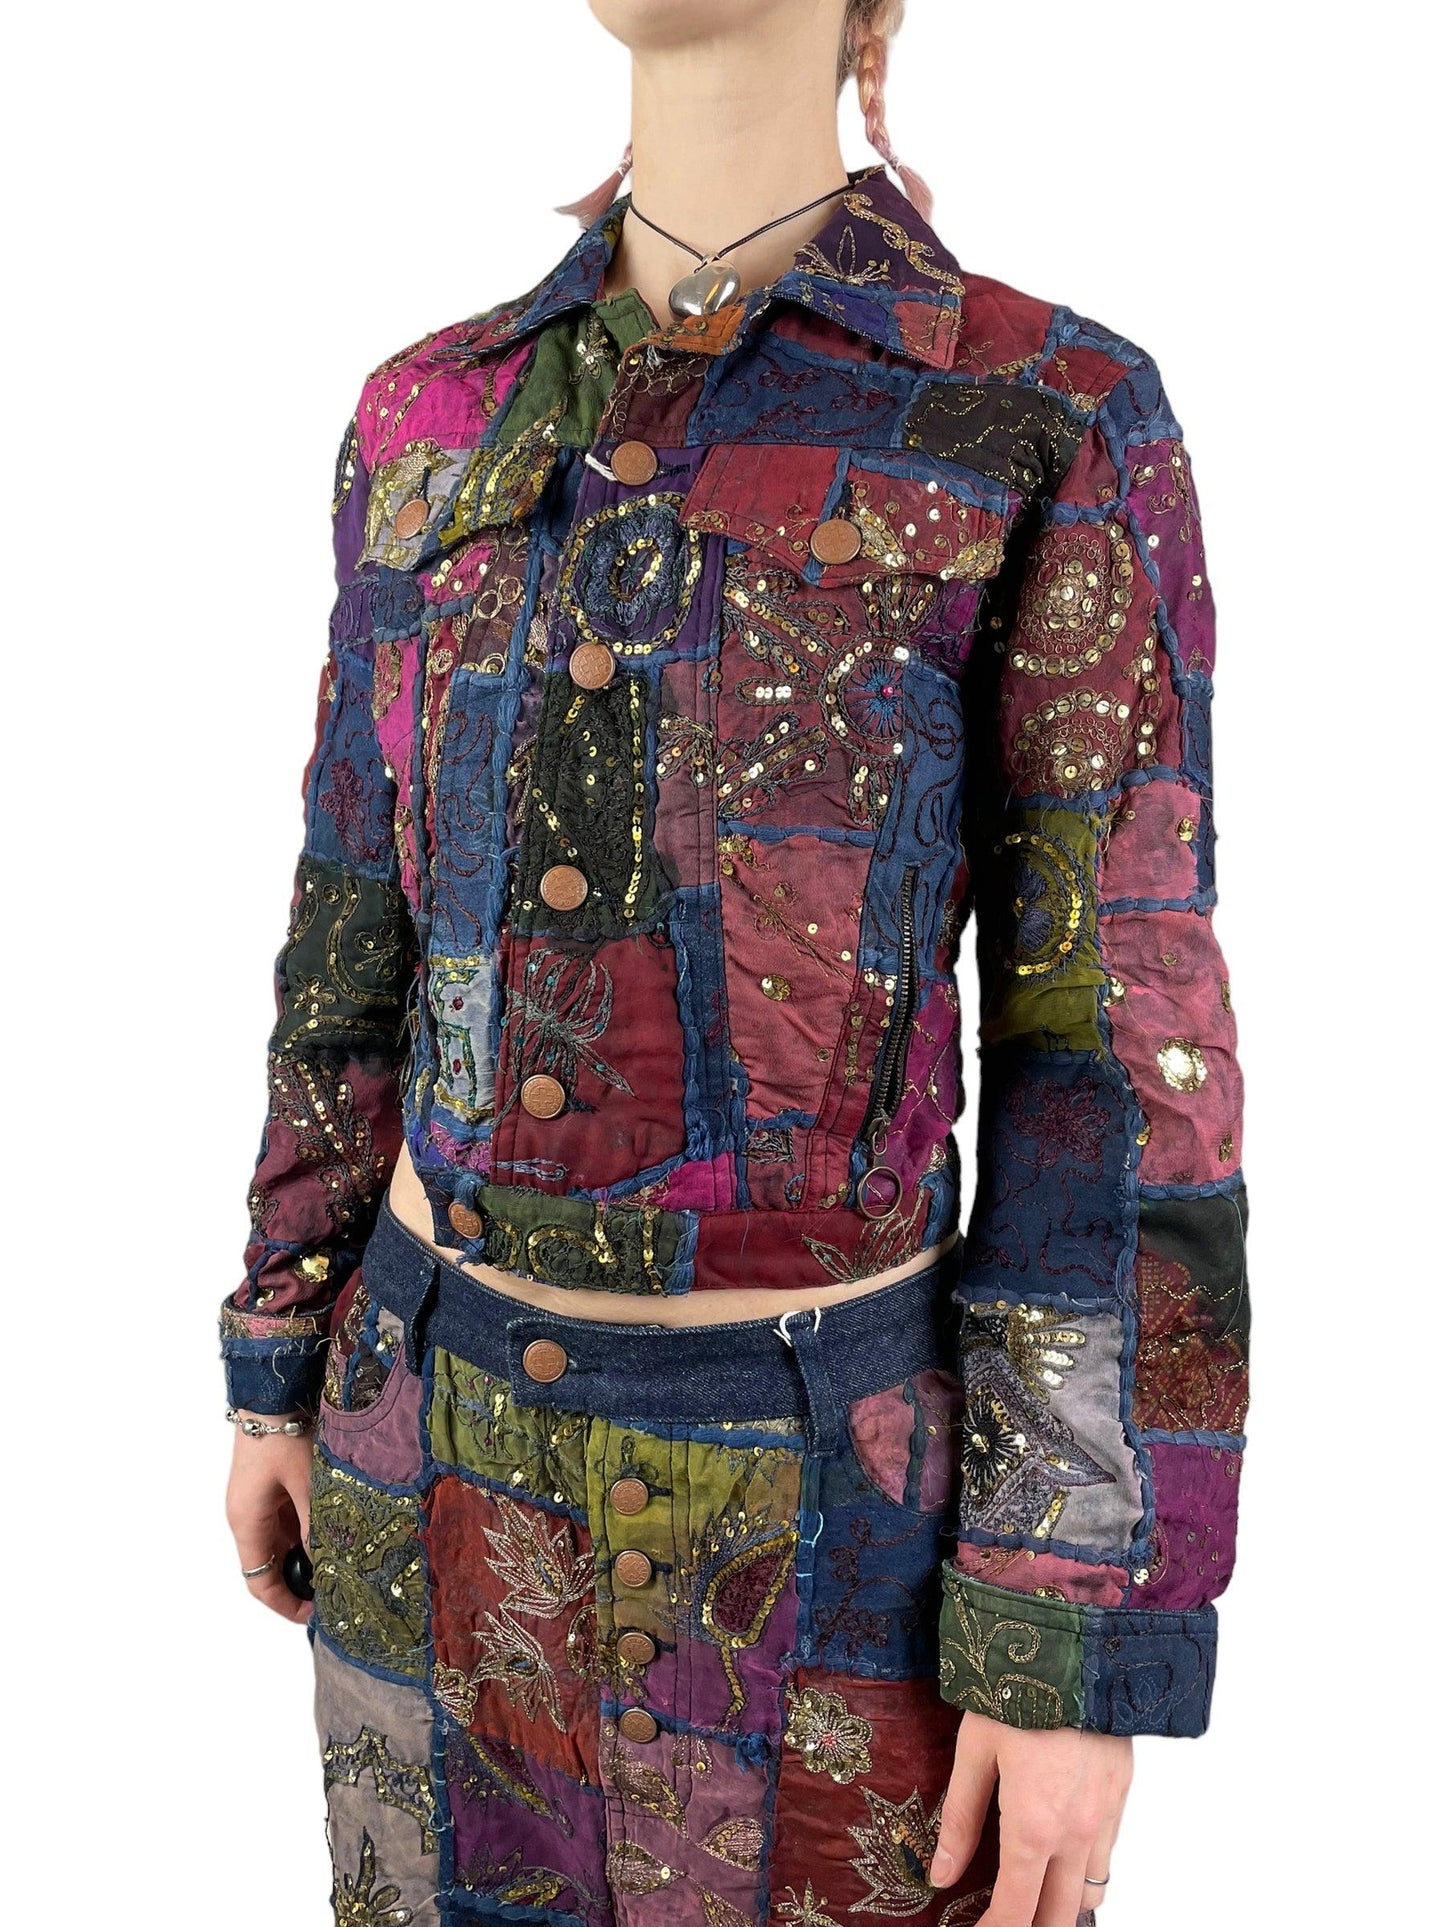 S/S 1999 Jean Paul Gaultier patchwork jacket - Known Source